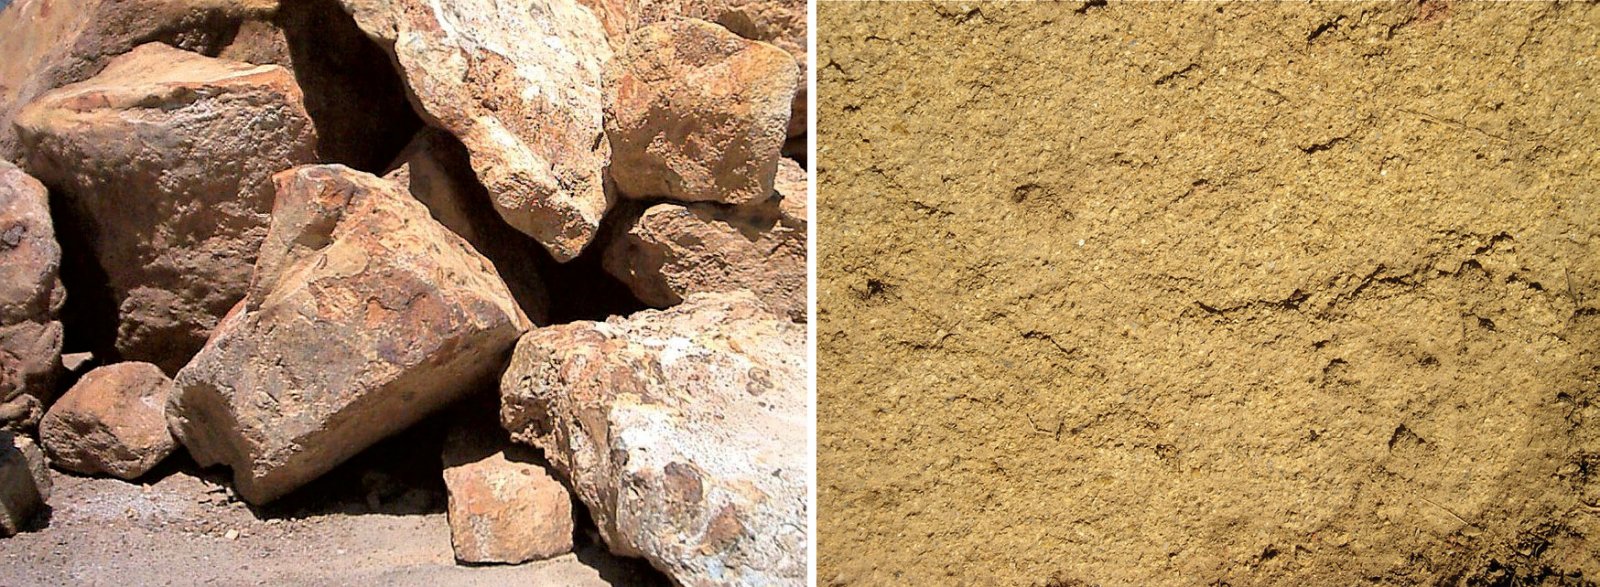 1 pav. a) smiltainis, b) smiltainio tekstūra / Fig. 1. a) sandstone, b) texture of sandstone